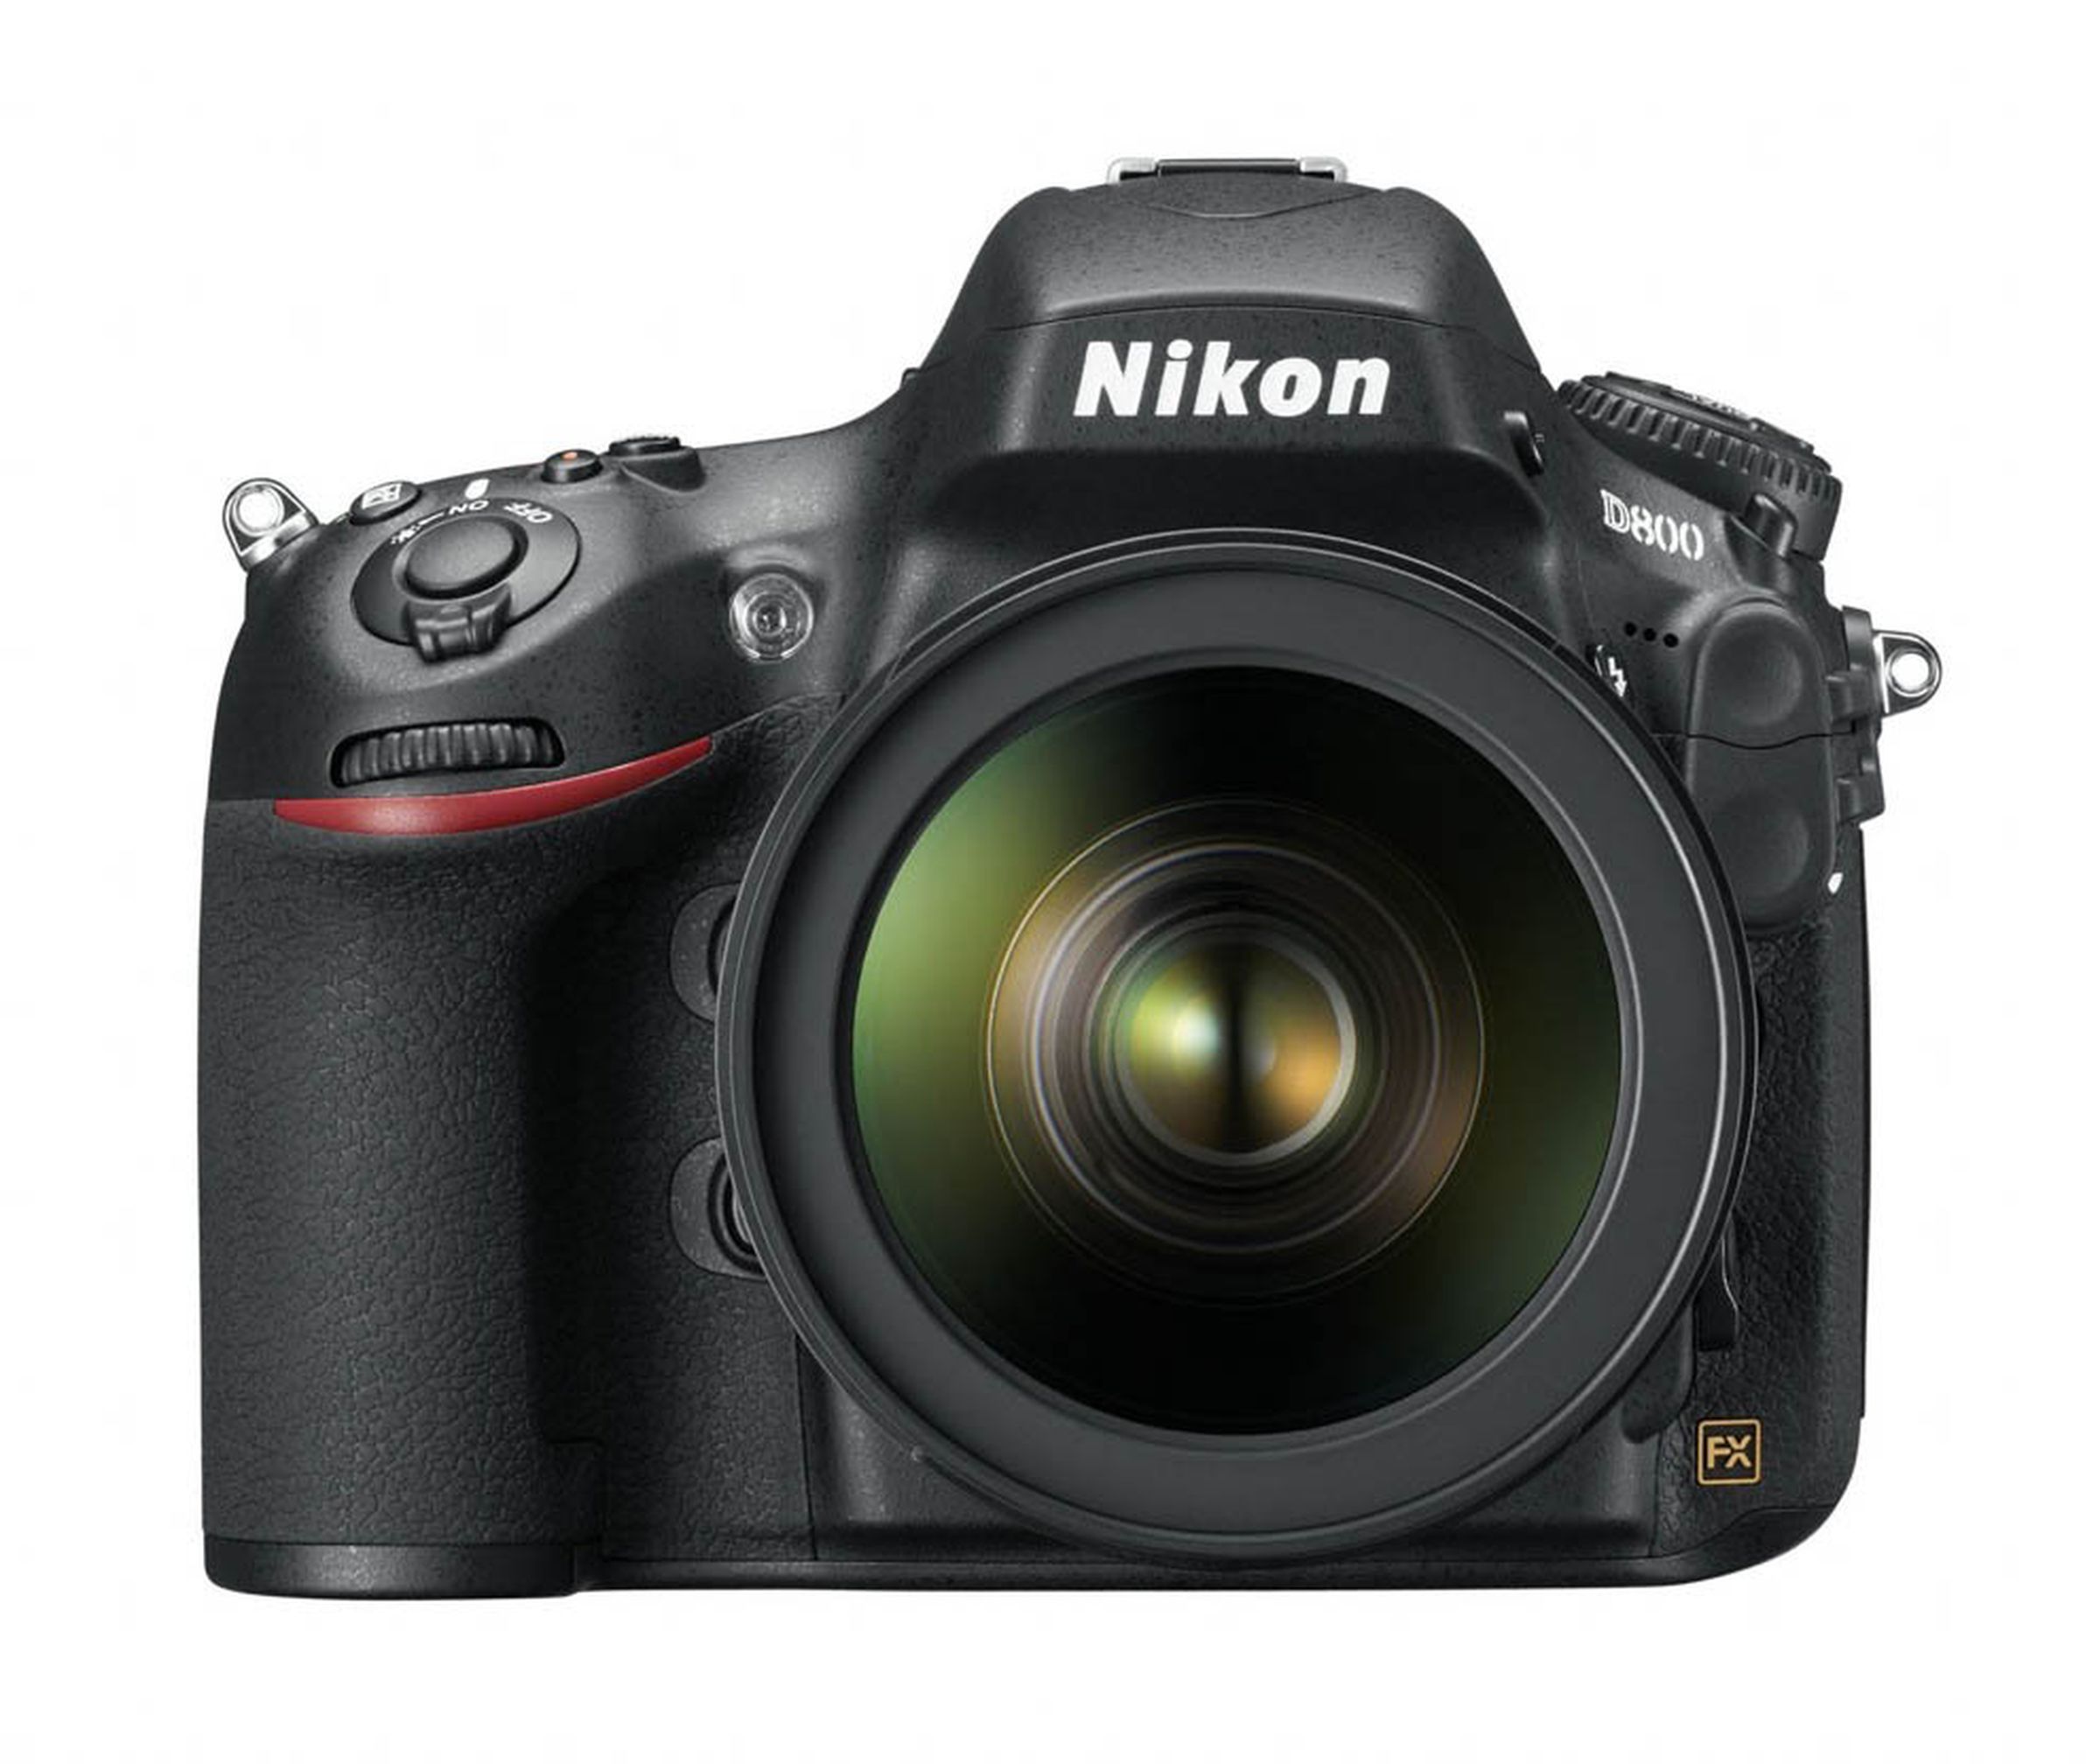 Nikon D800 press image leaks gallery